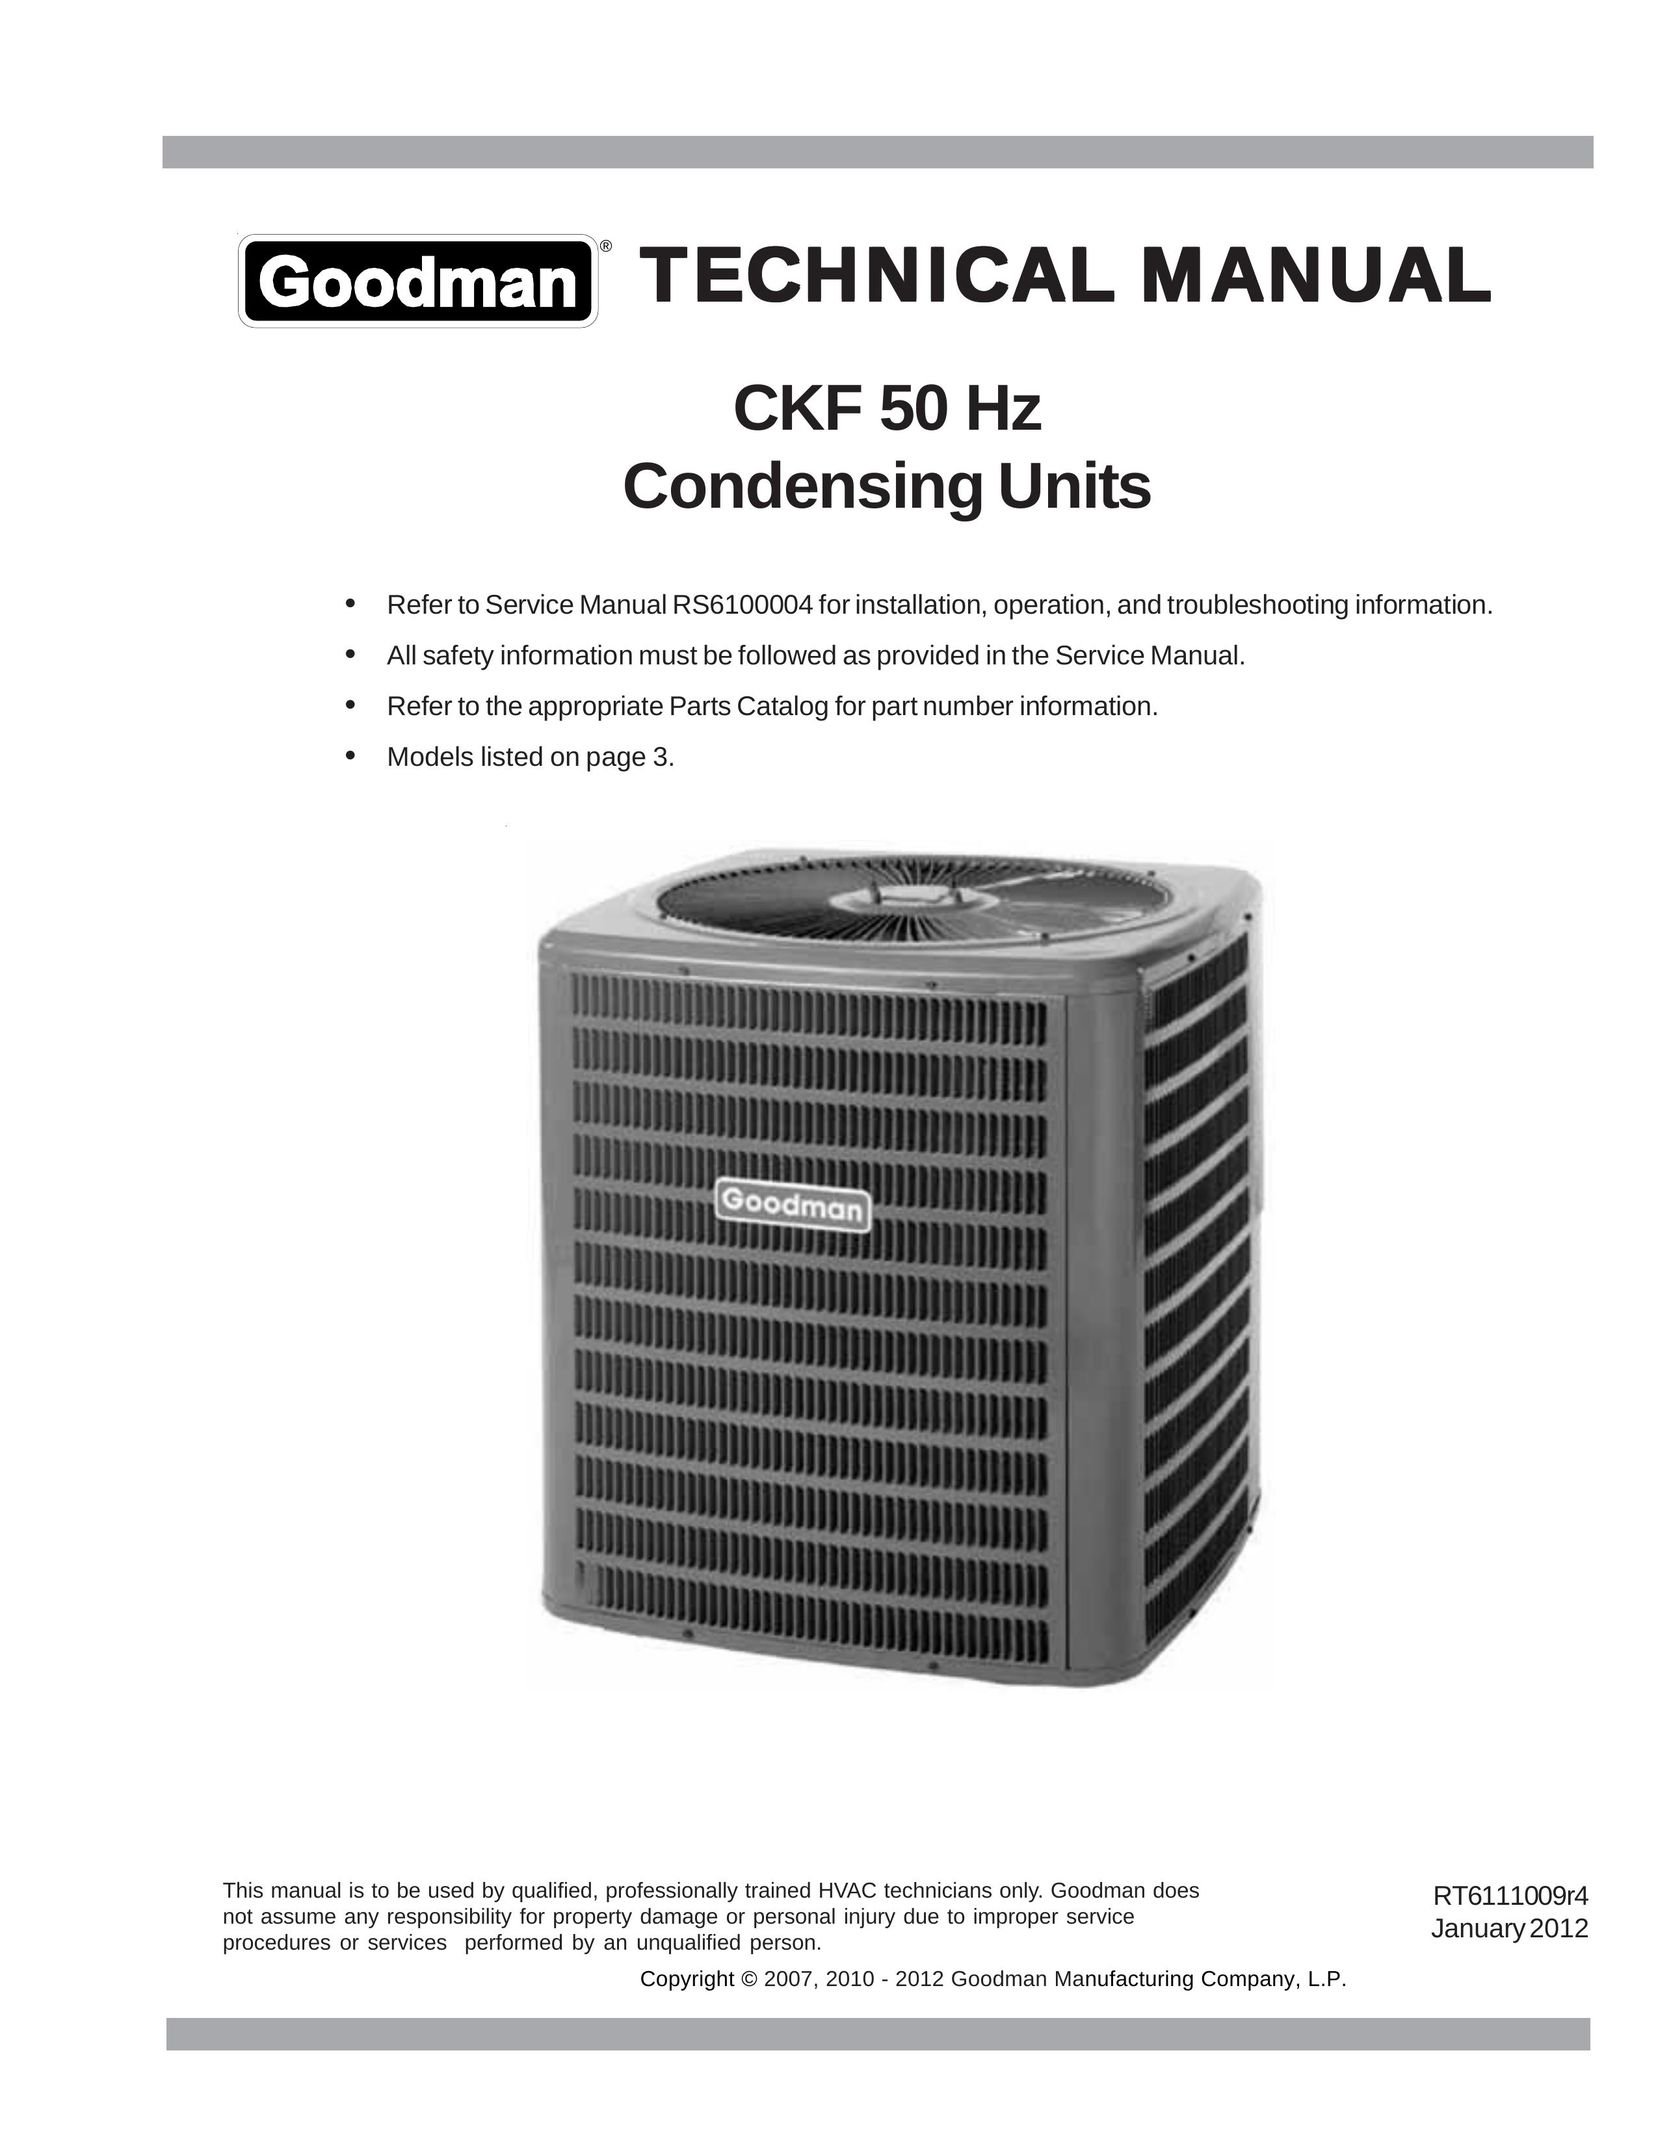 Goodman Mfg Condensing Units Air Conditioner User Manual